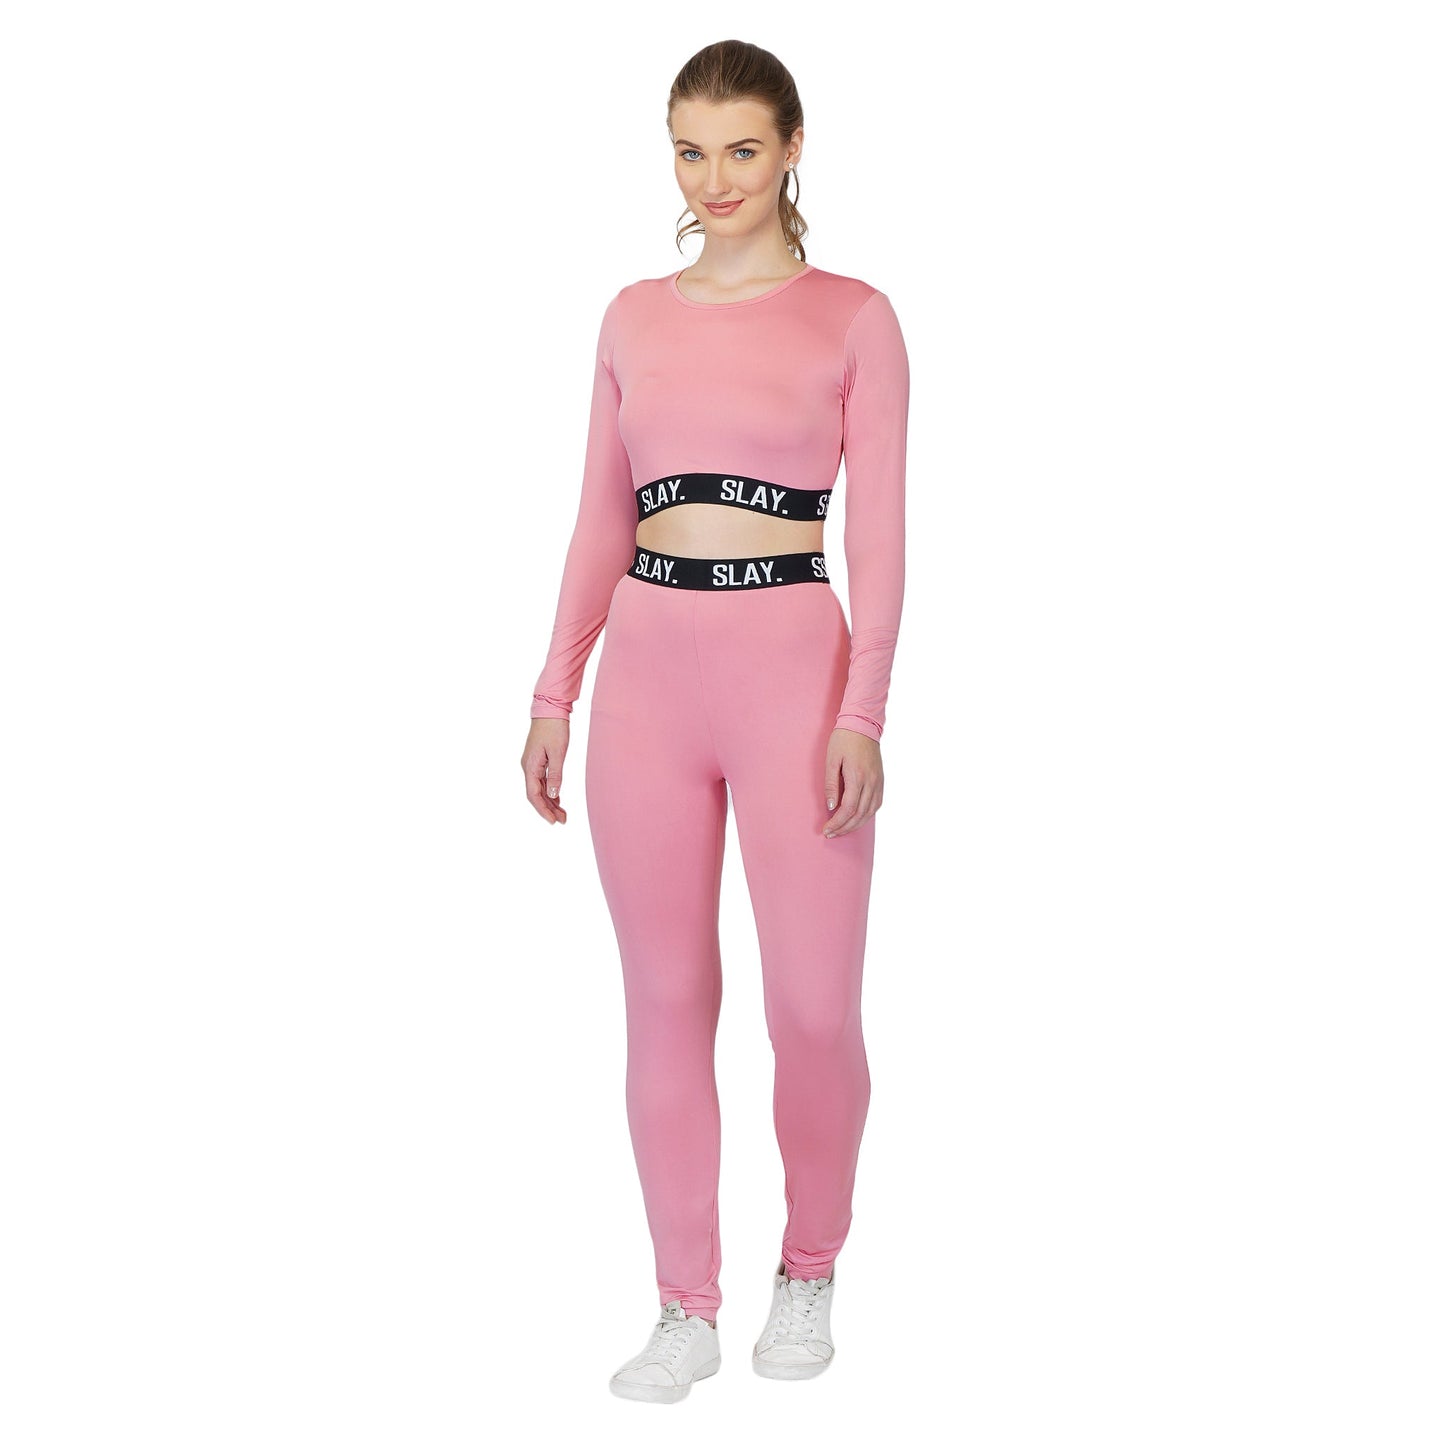 SLAY. Sport Women's Activewear Full Sleeves Crop Top Pink